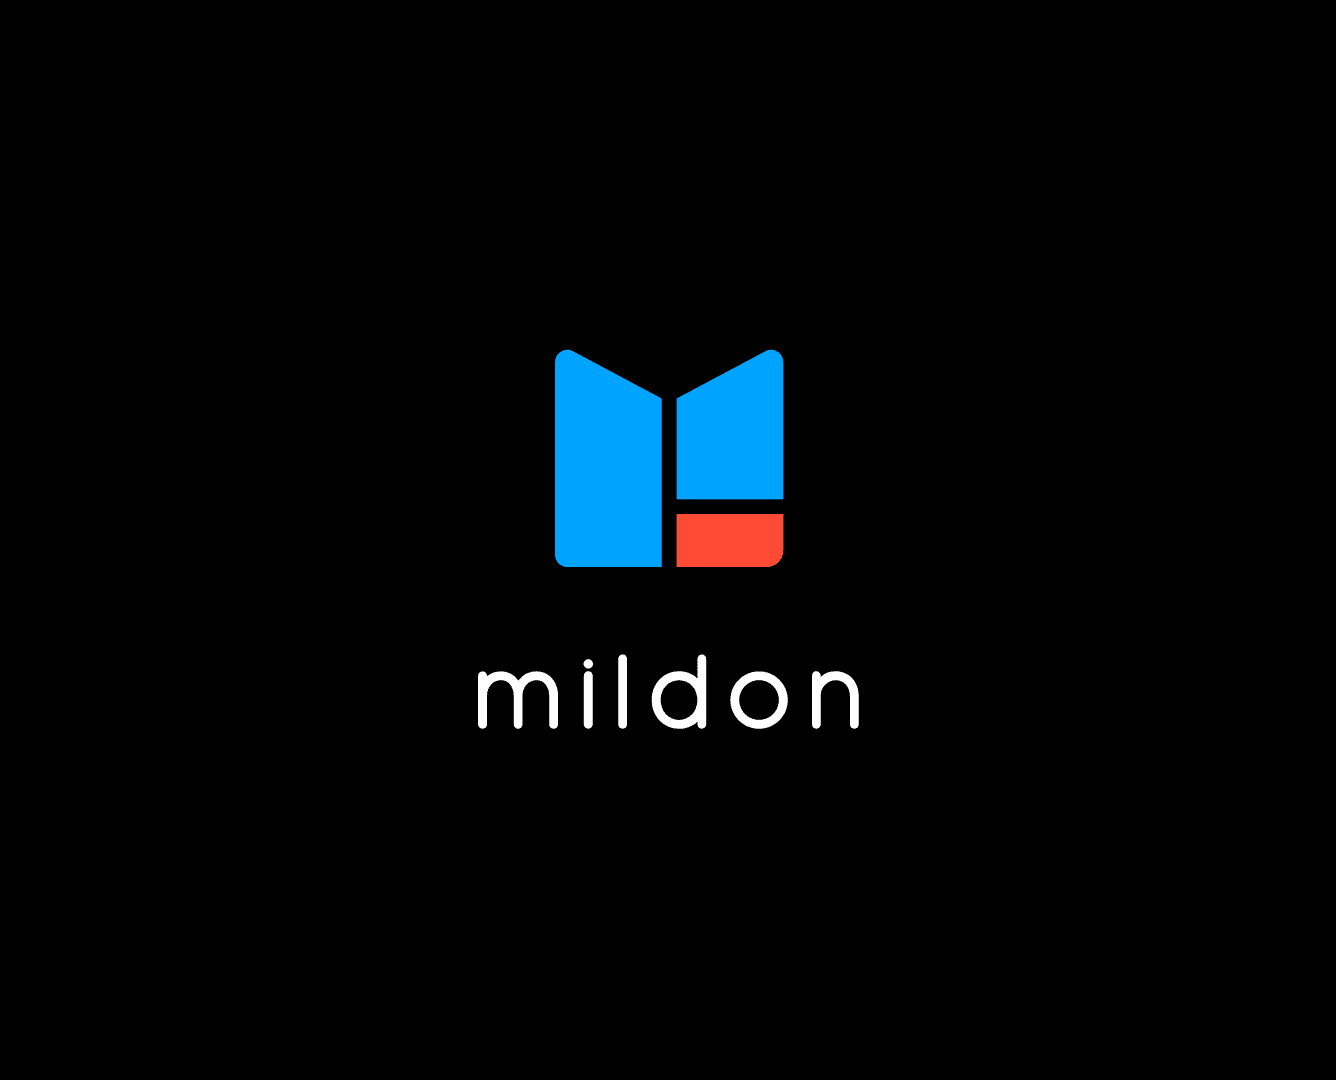 Mildon logo on black